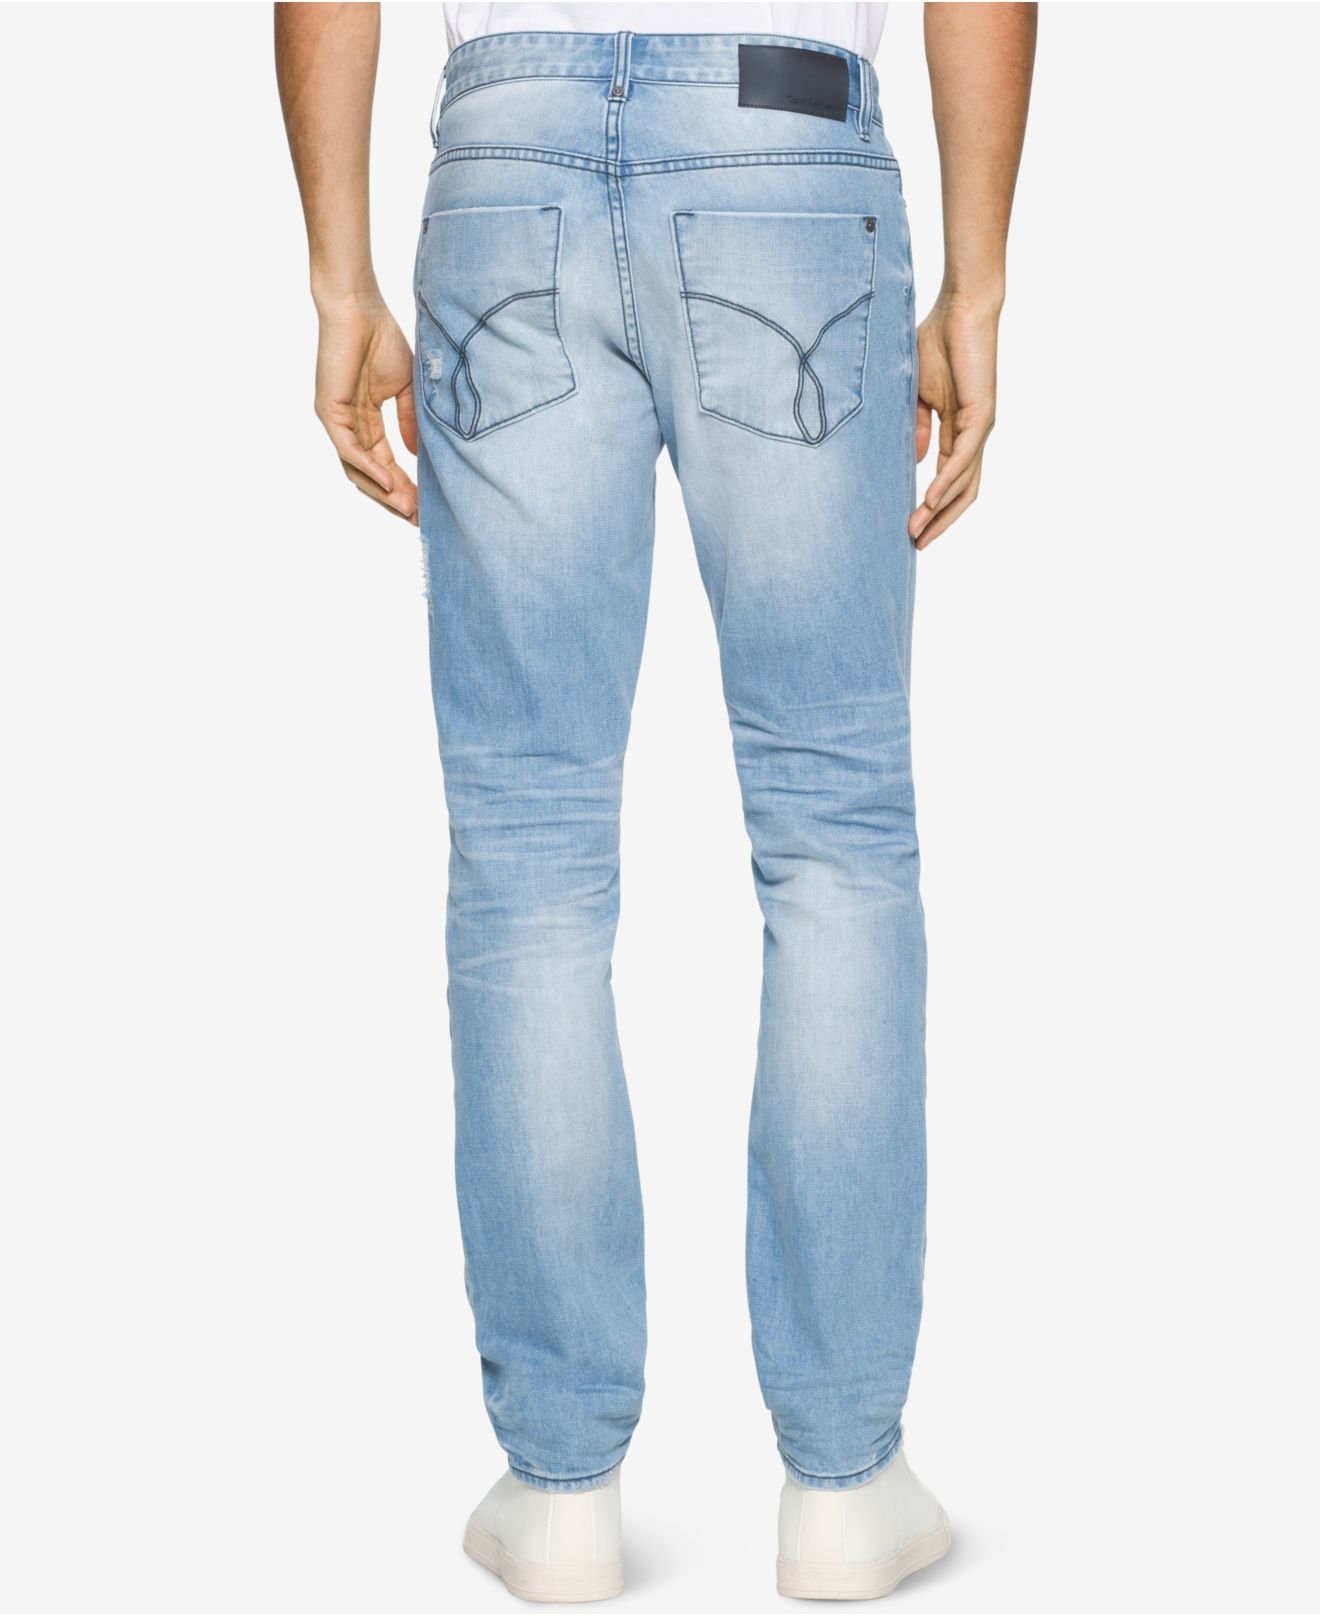 Lyst - Calvin Klein Jeans Men's Slim Straight Pure Blue Jeans in Blue ...